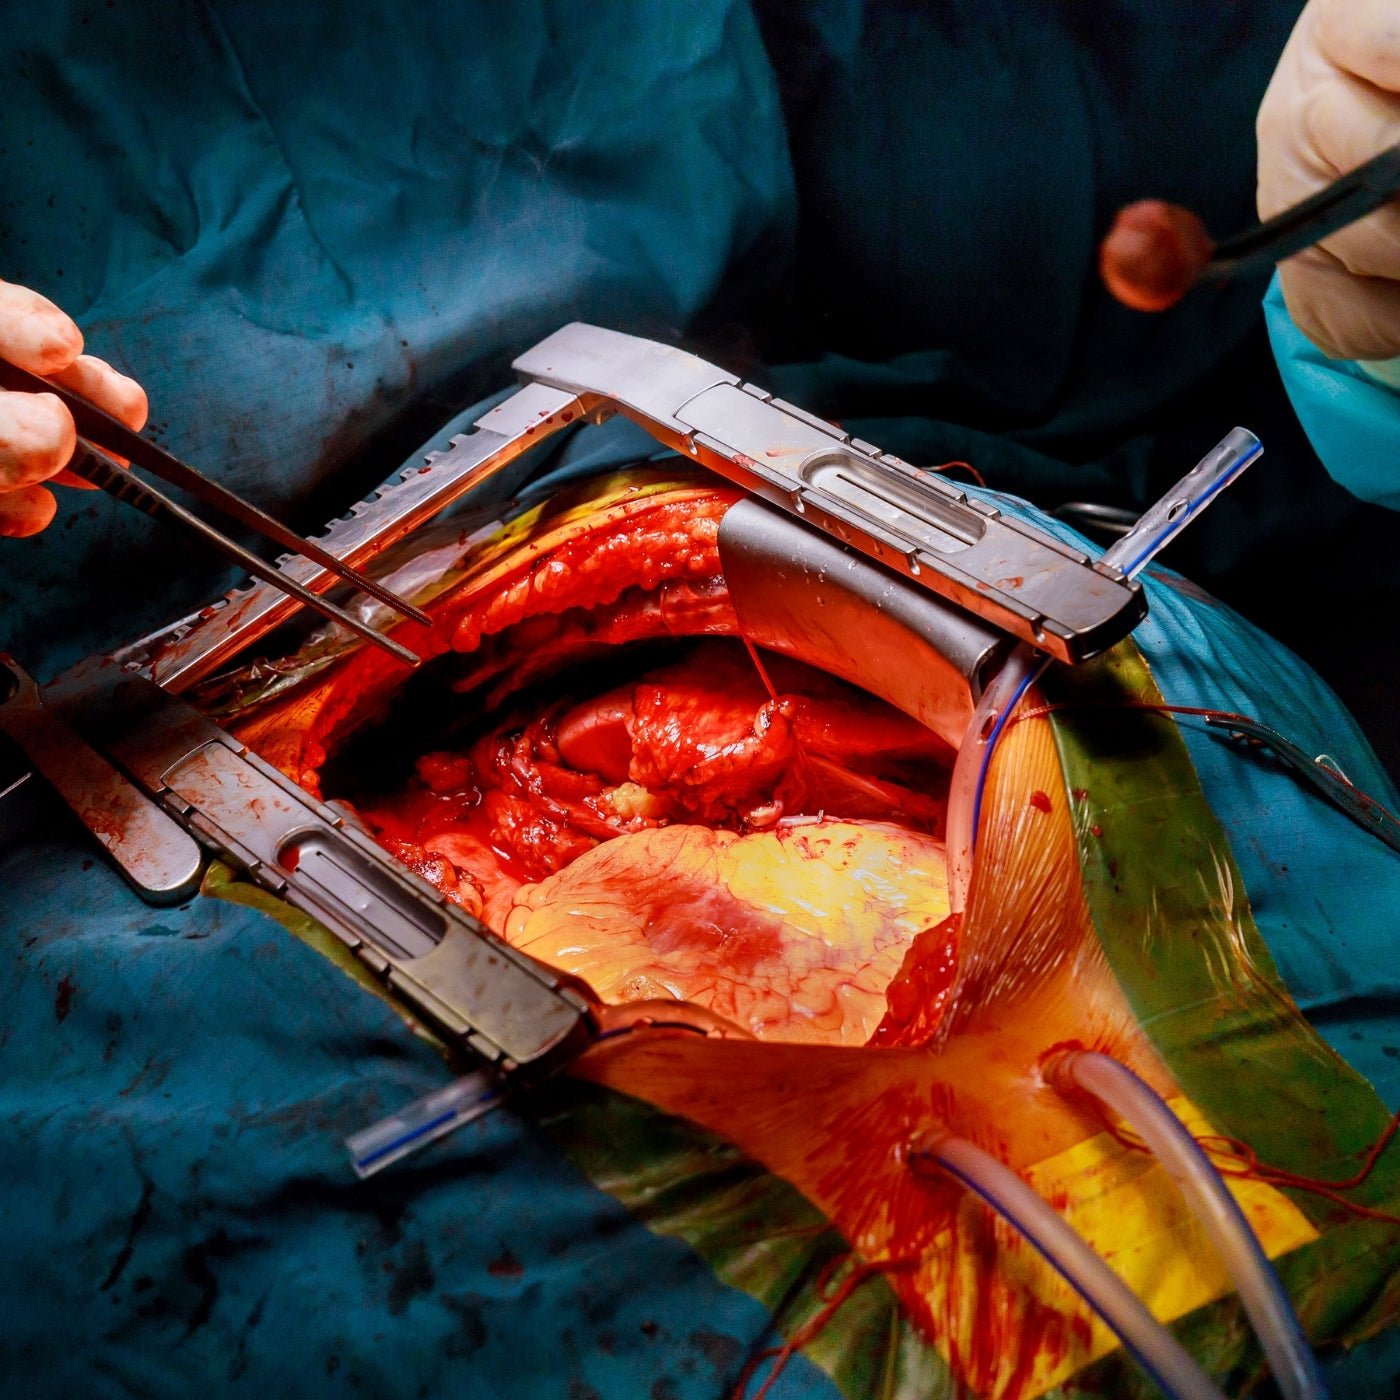 Cardiac transplants - heart transplantation